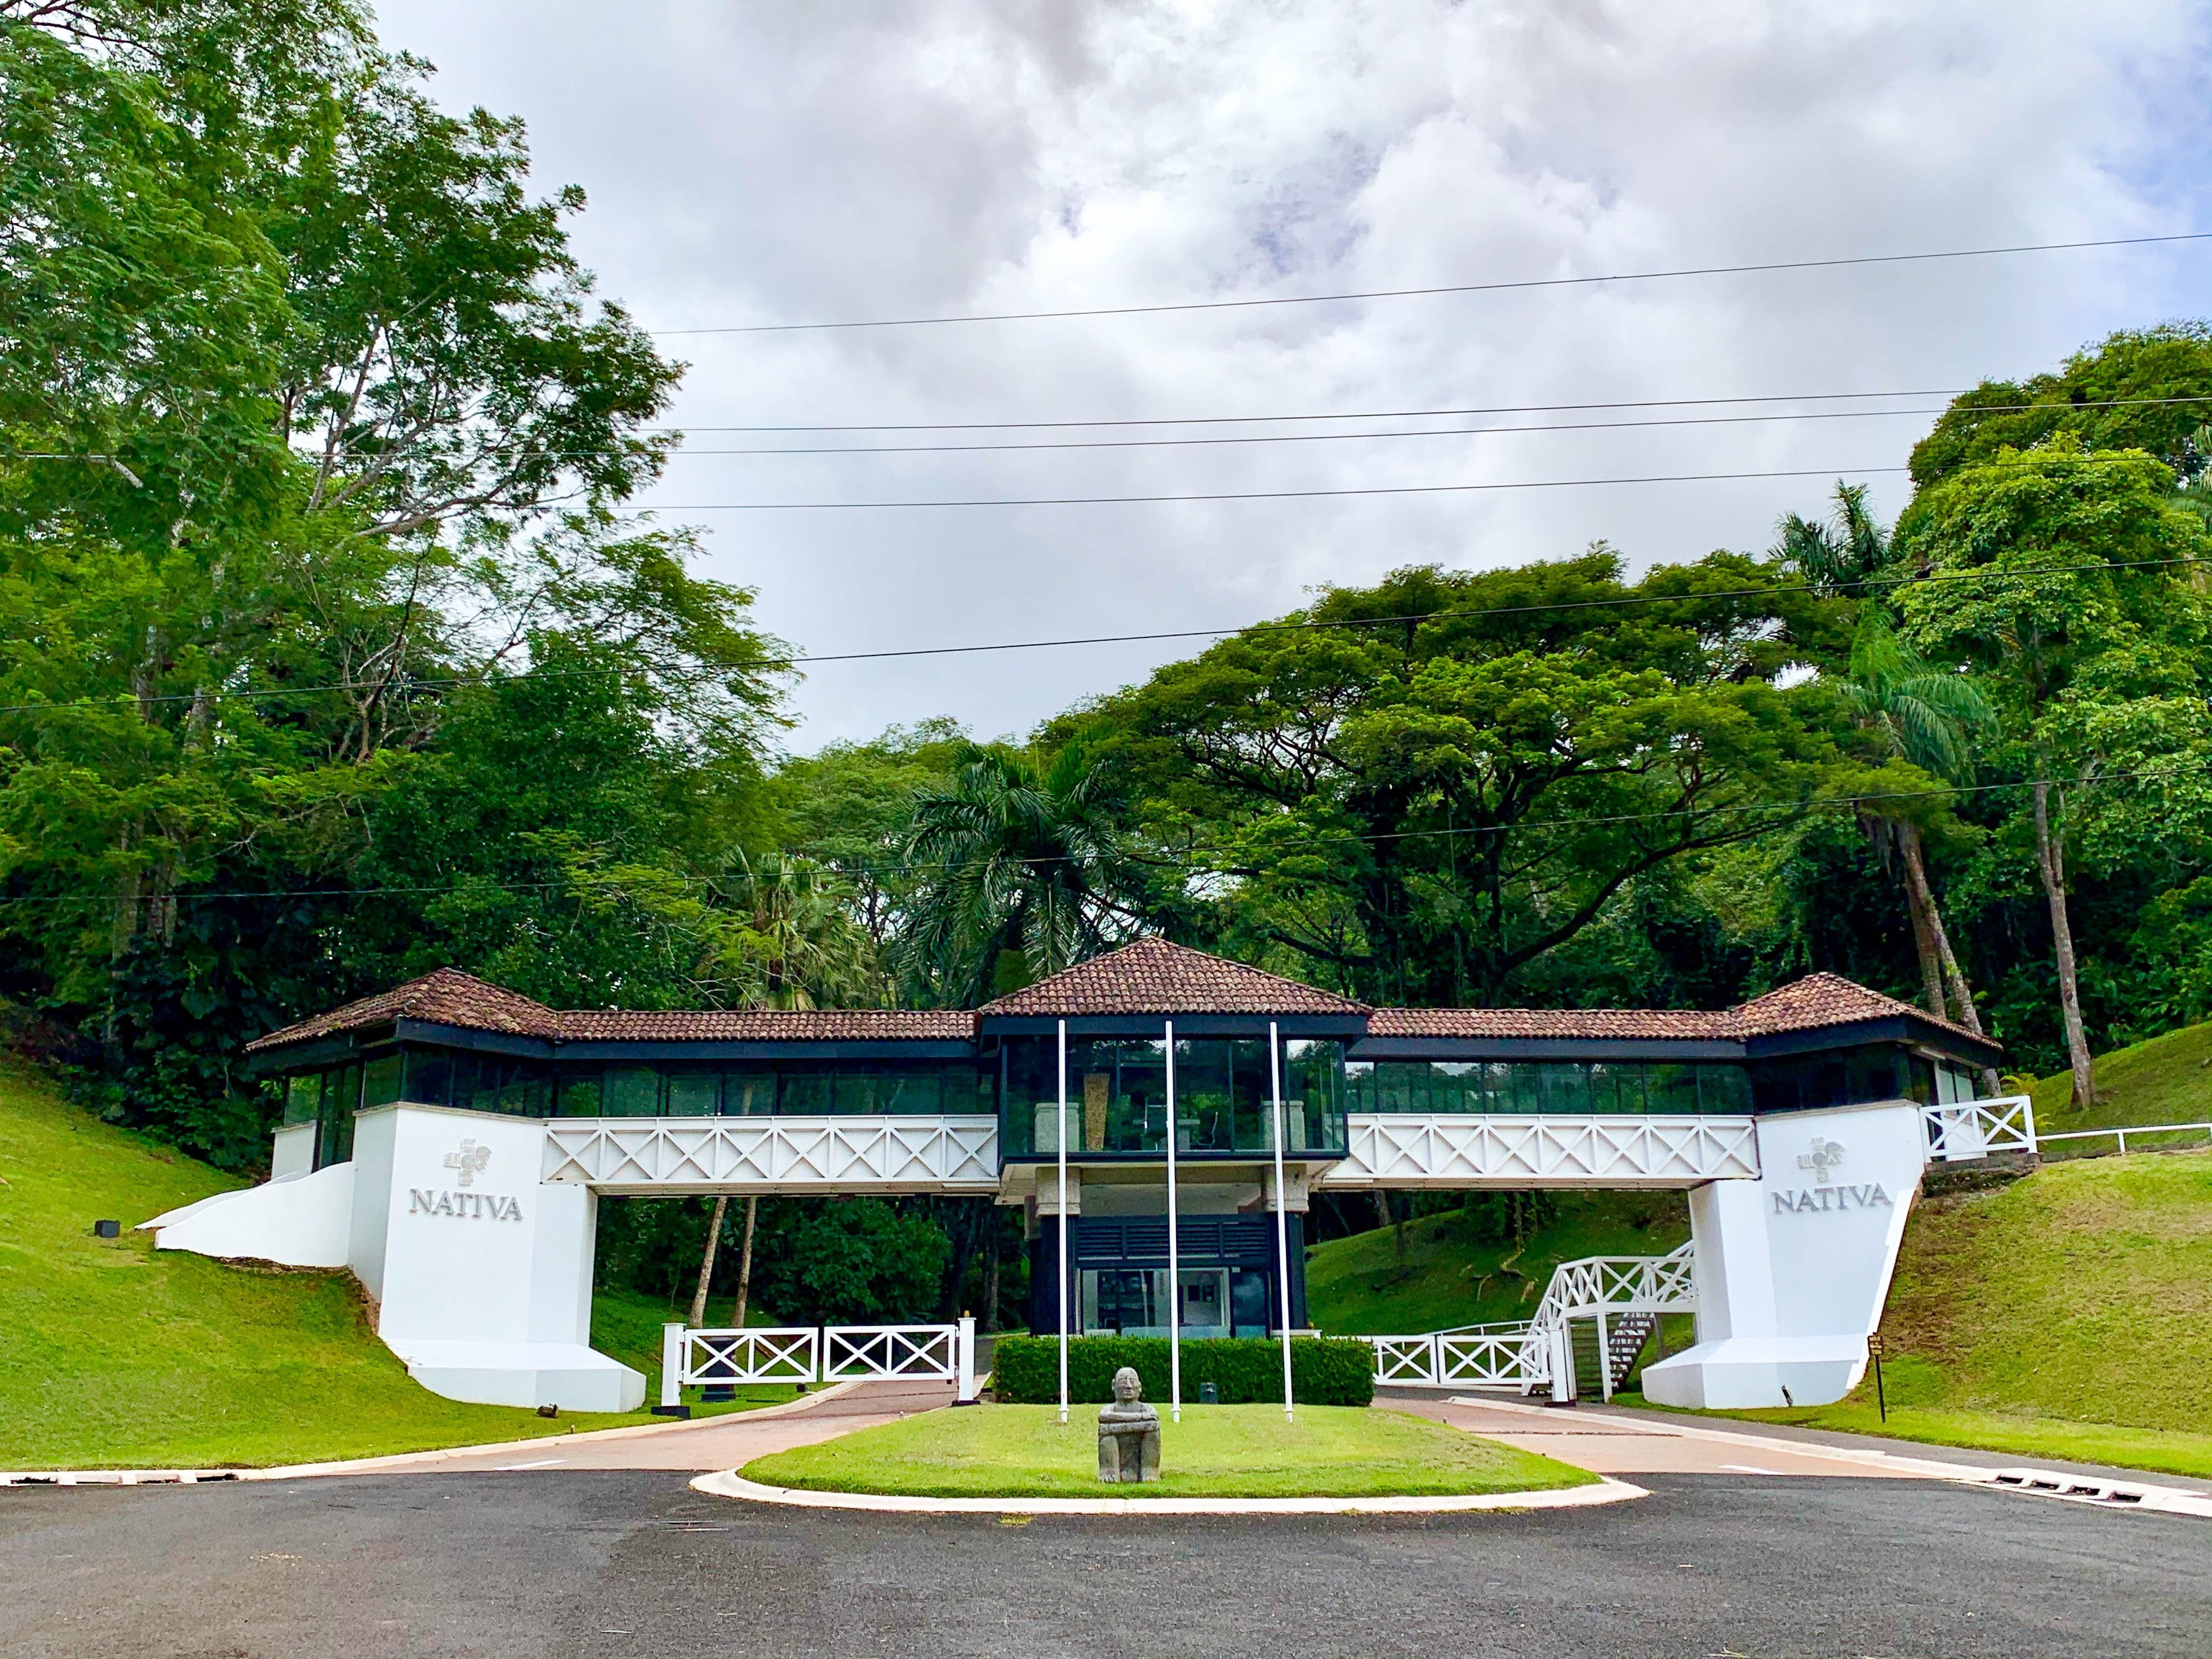 2. Nativa Resort, Puntarenas